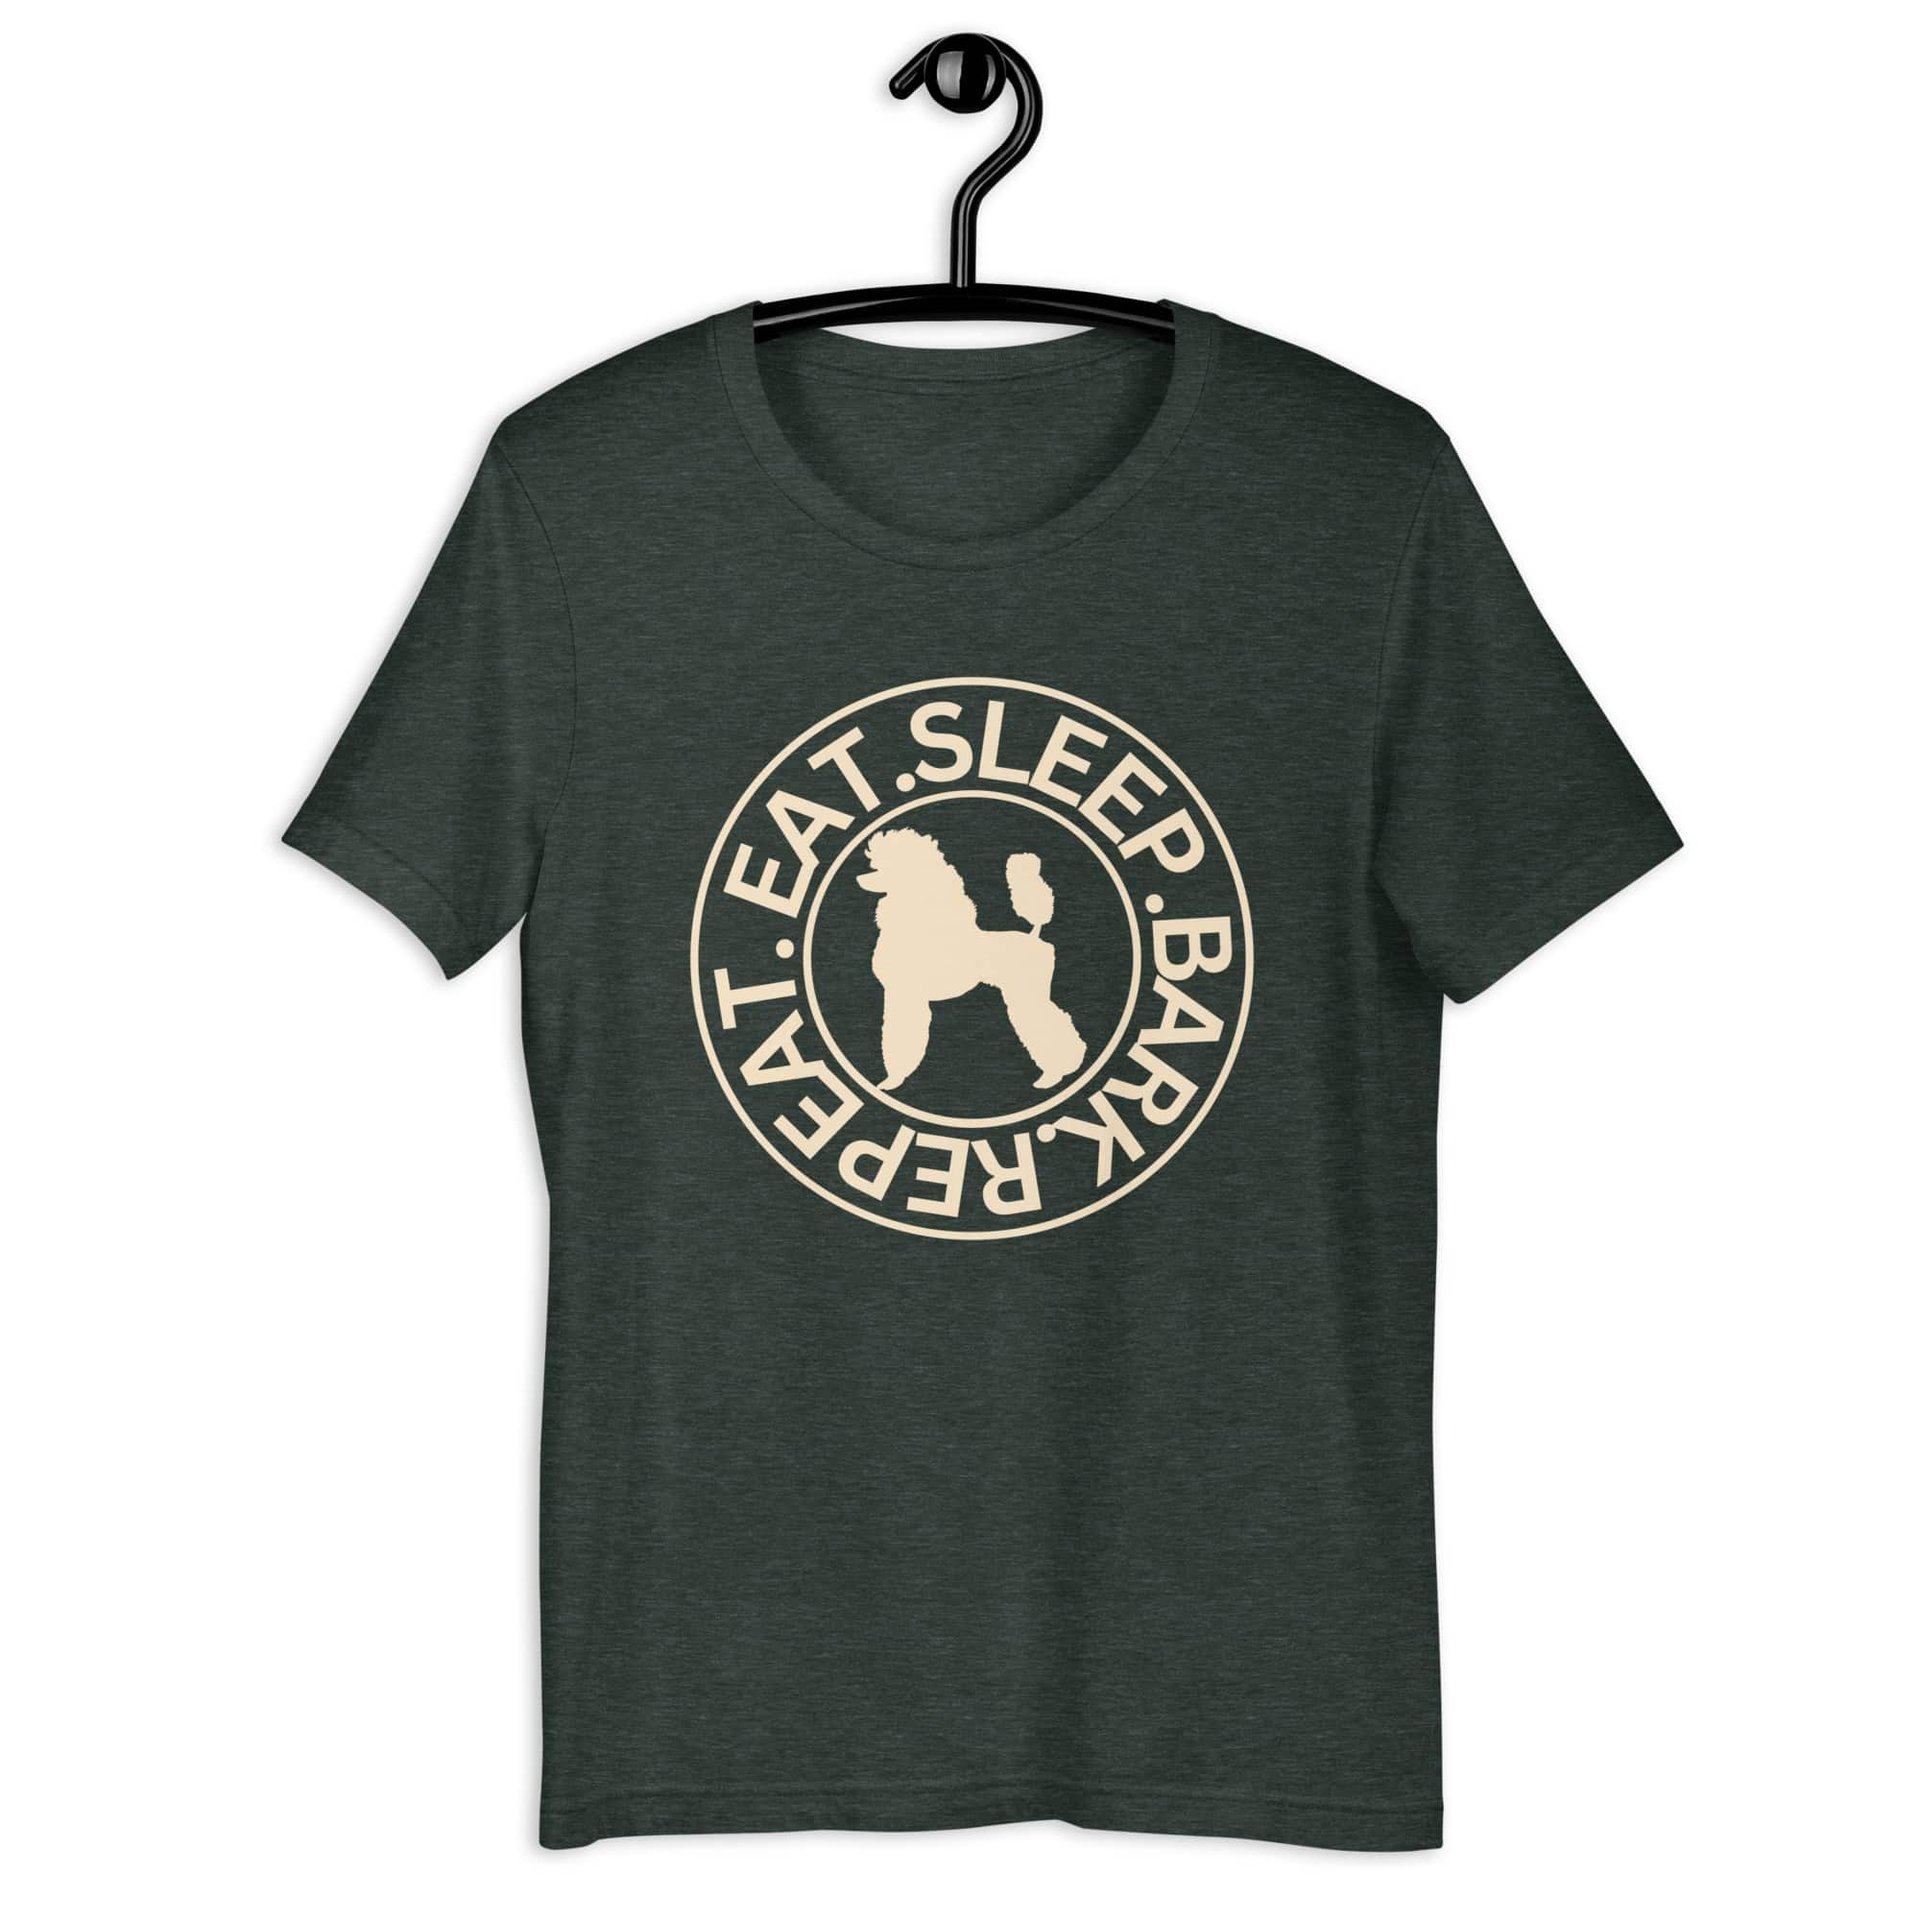 Eat Sleep Repeat Bark Miniature Poodle Unisex T-Shirt. Heather Forest Green